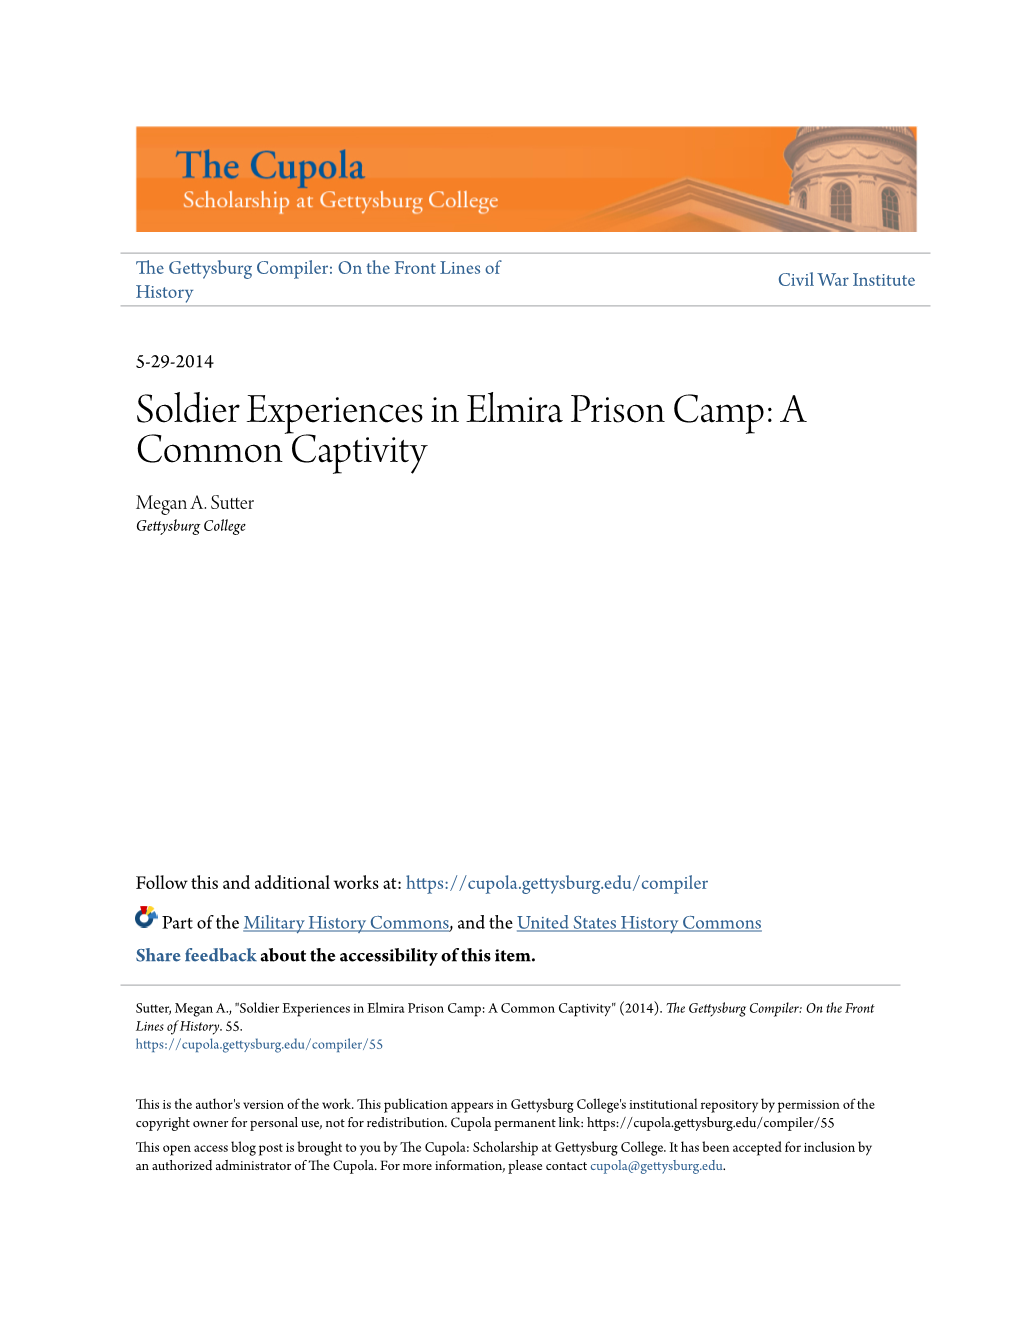 Soldier Experiences in Elmira Prison Camp: a Common Captivity Megan A